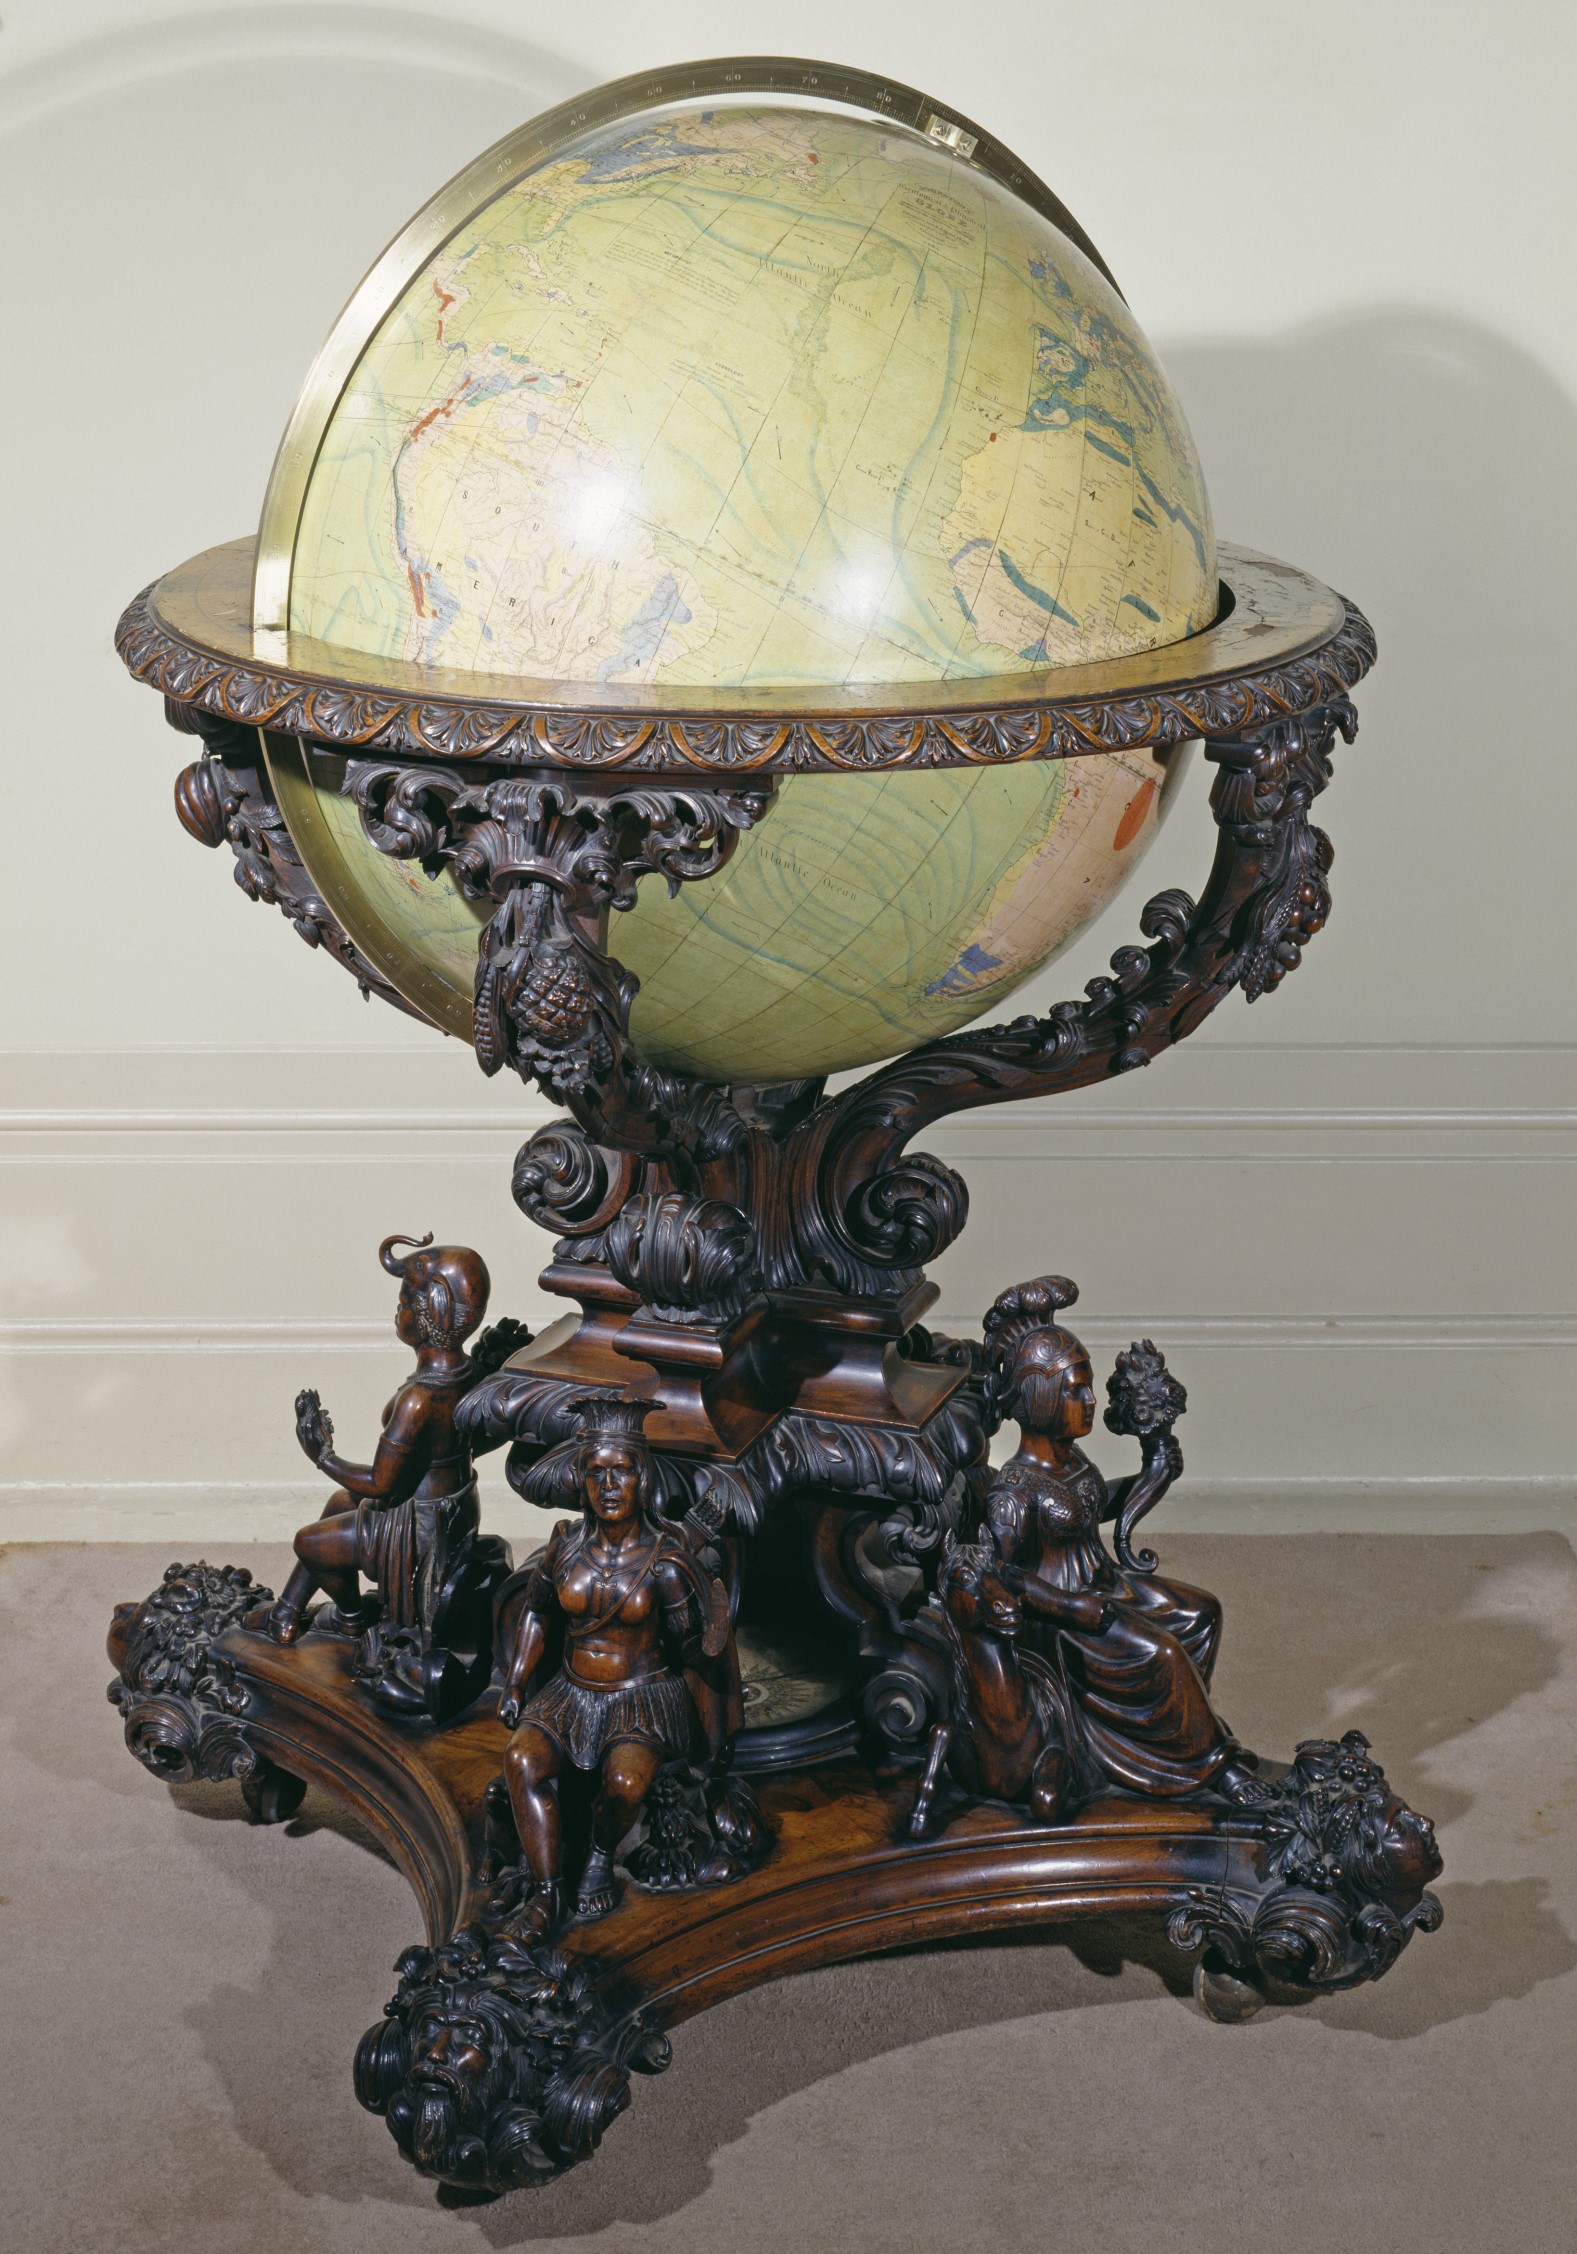 The Johnston Globe